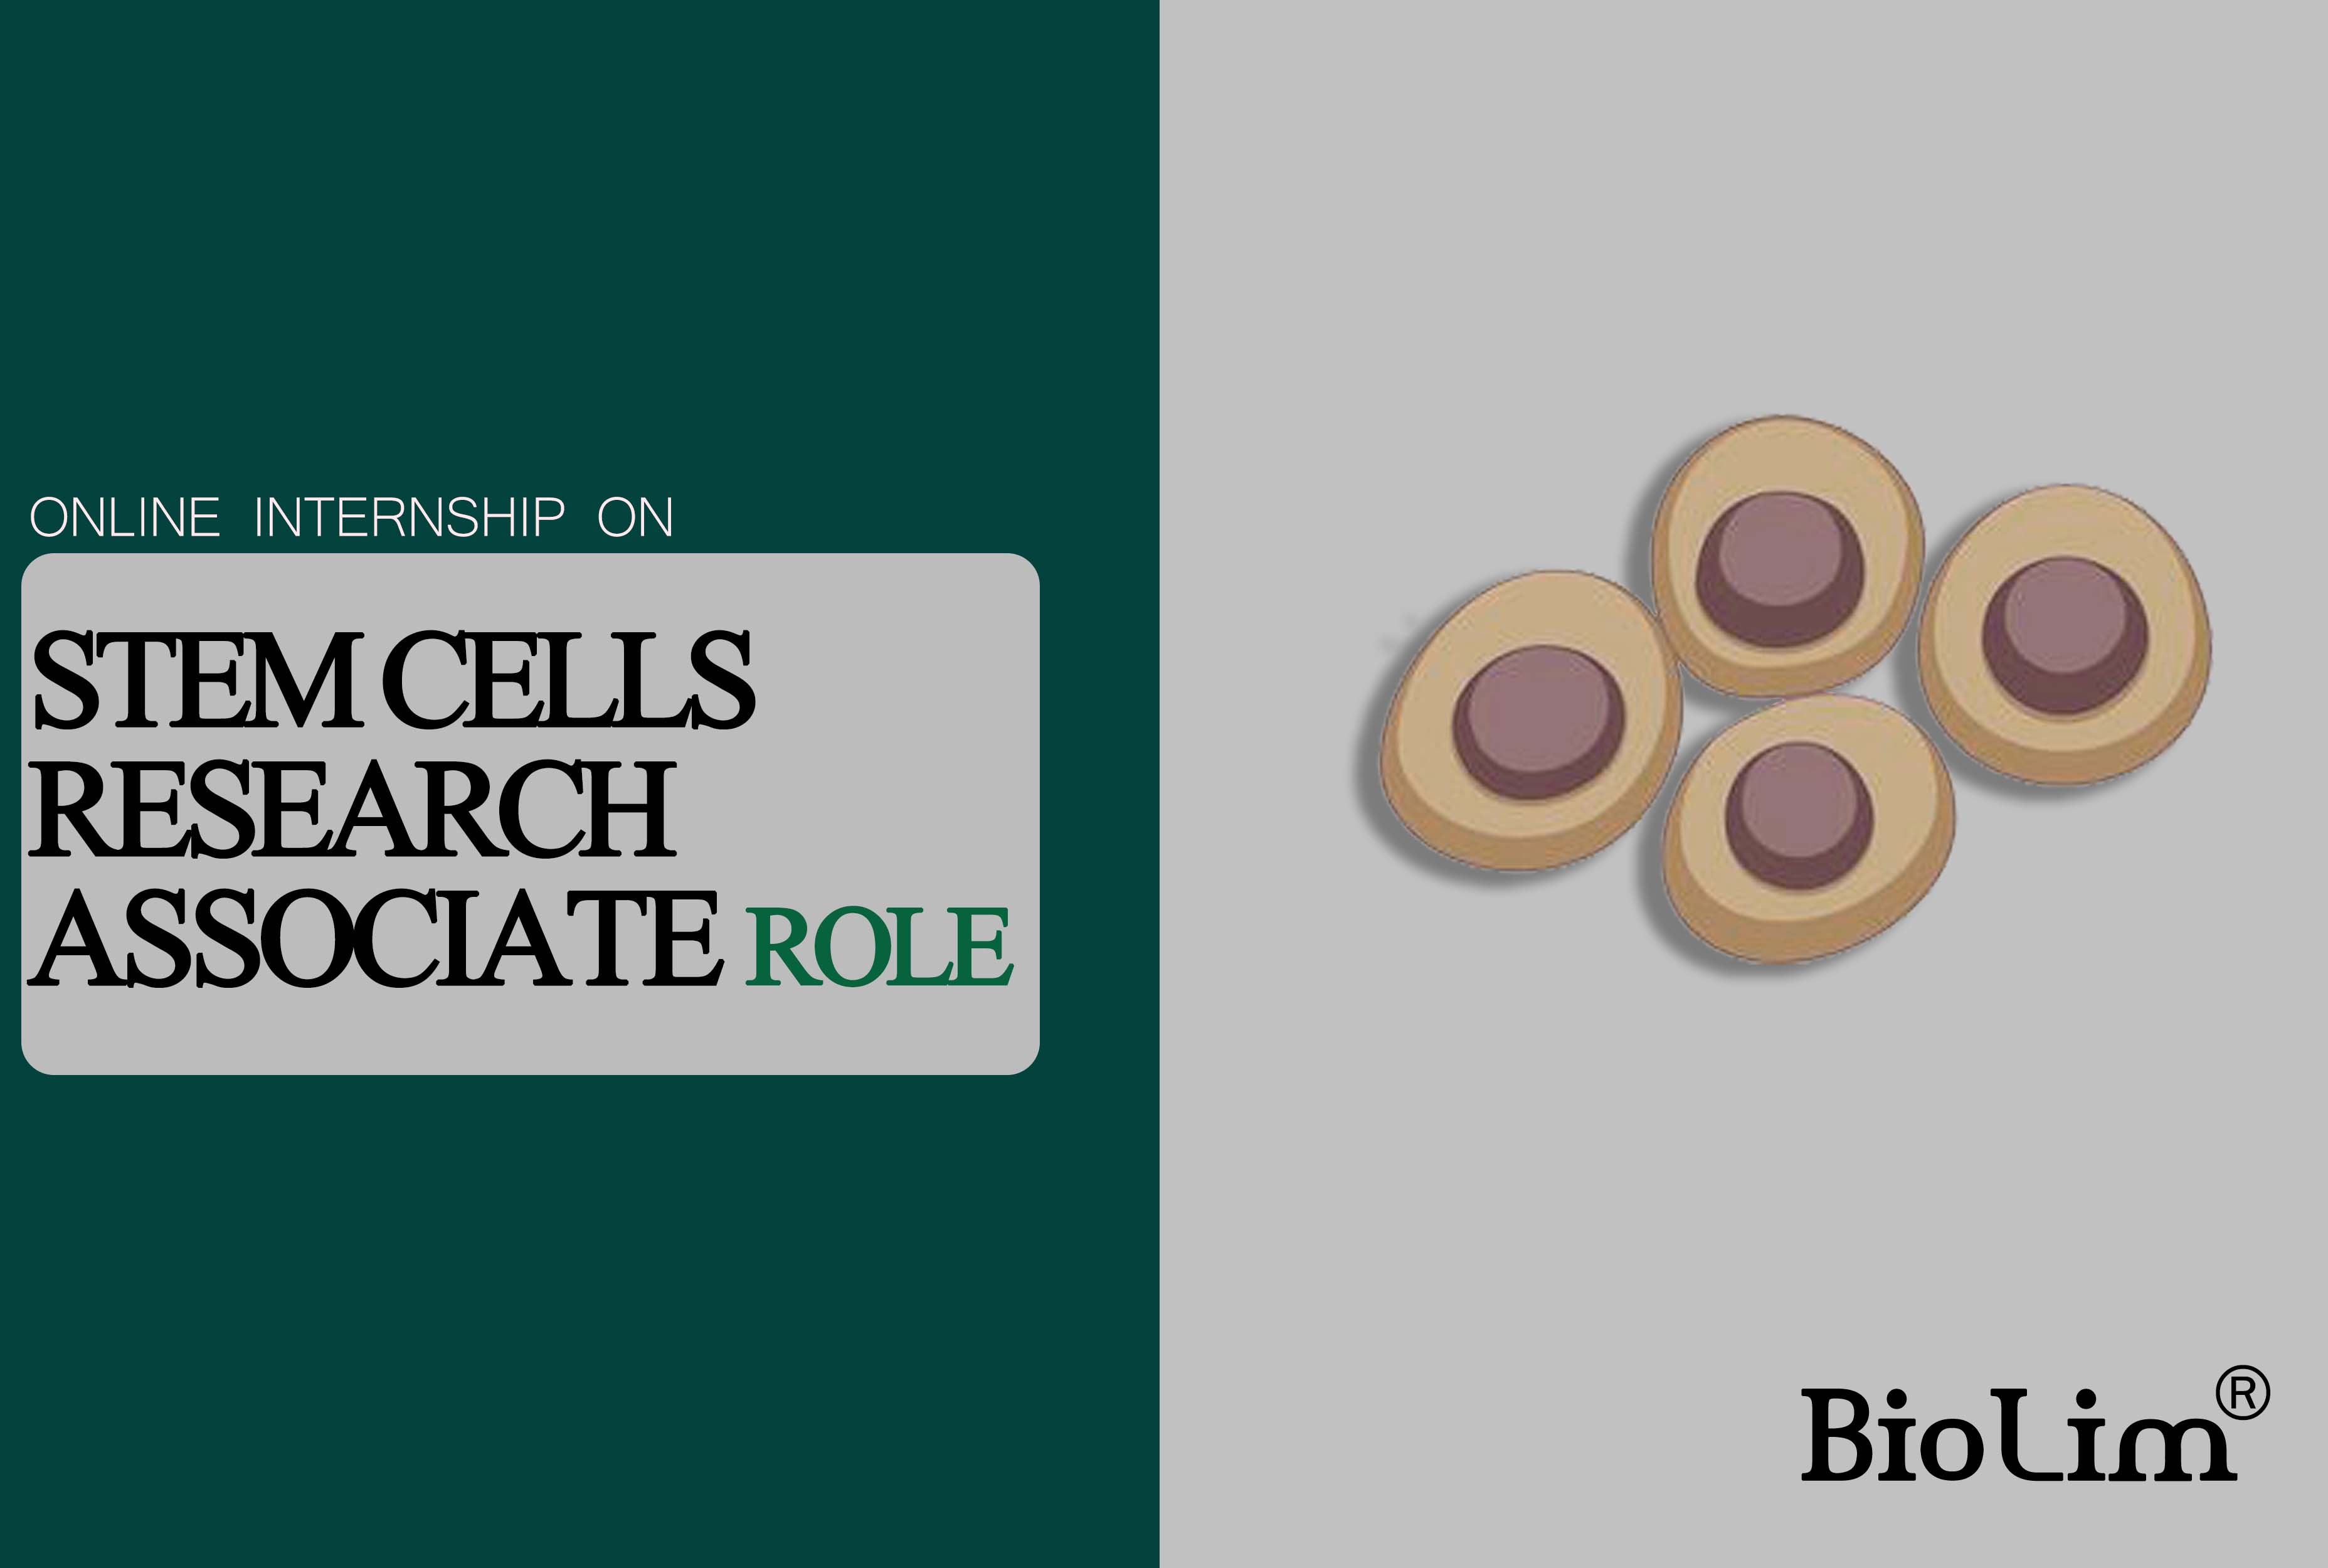 Internship on stem cells research associate job role